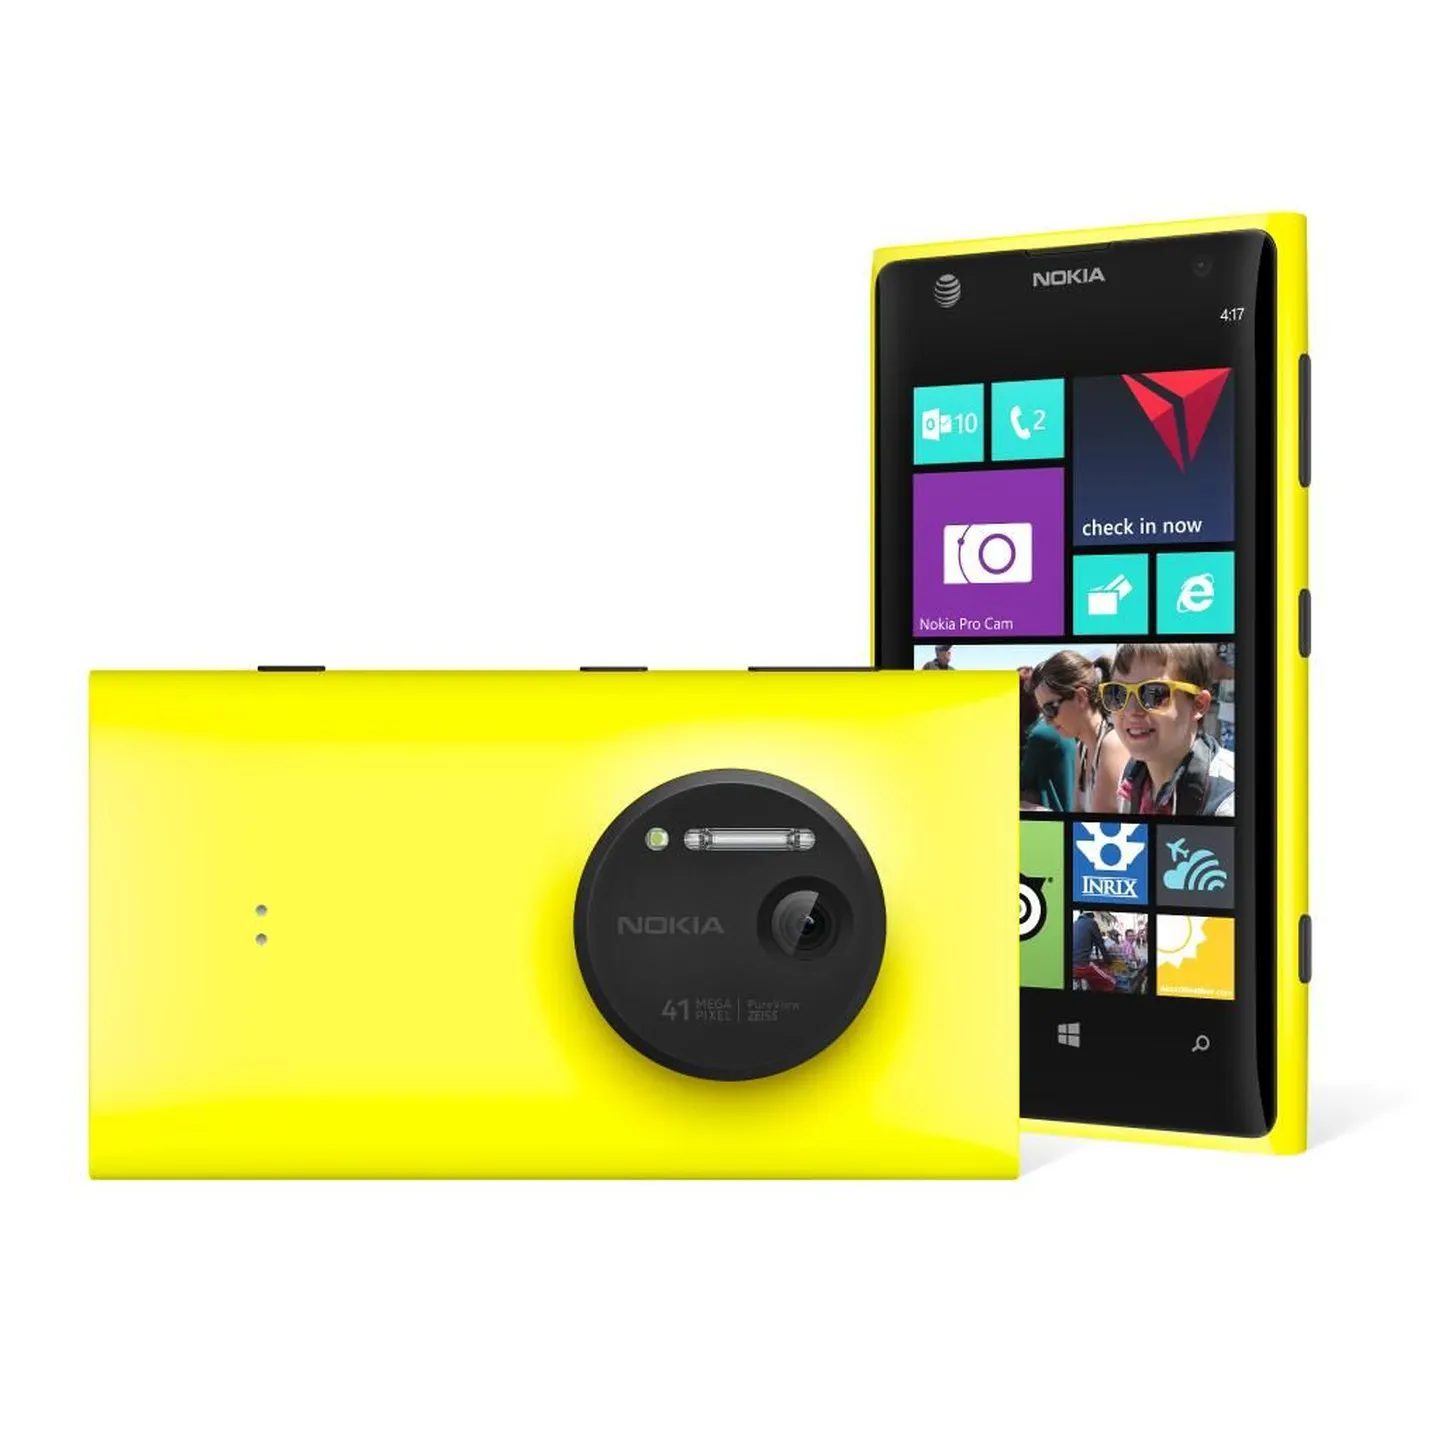 Lumia 1020. Иллюстративное фото.